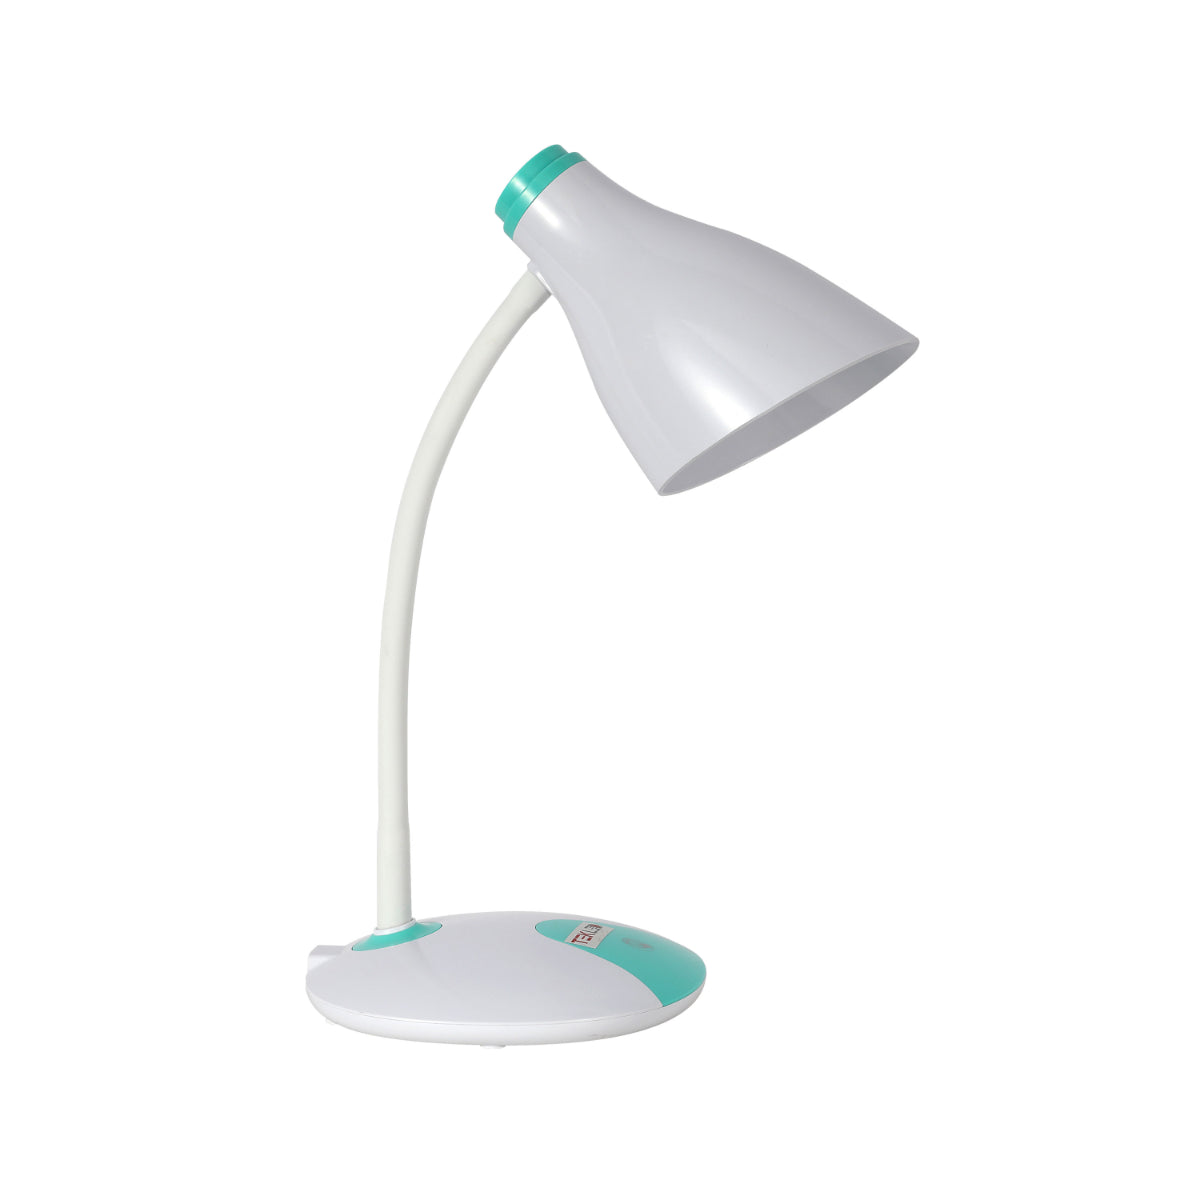 Main image of Adjustable Gooseneck LED Desk Lamp with Dual Colour Design 130-03758